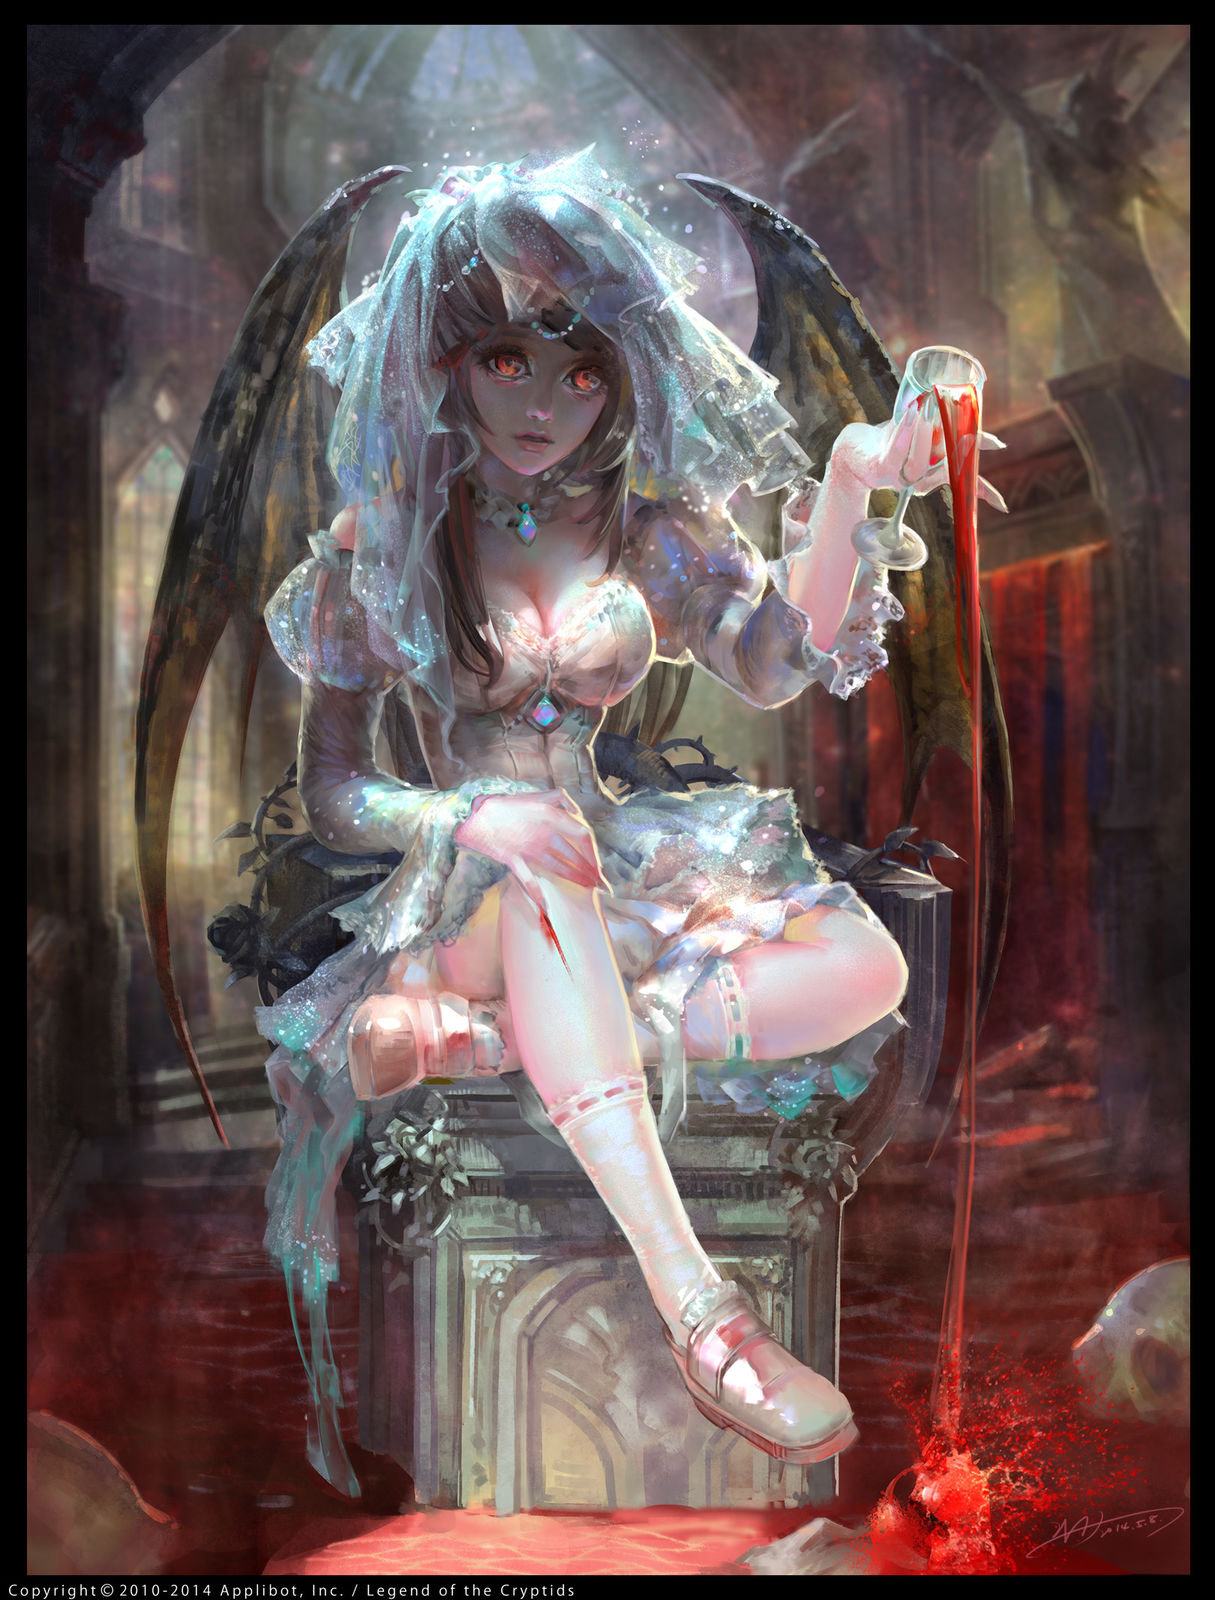 Vampire Bride by YU-HAN CHEN. 